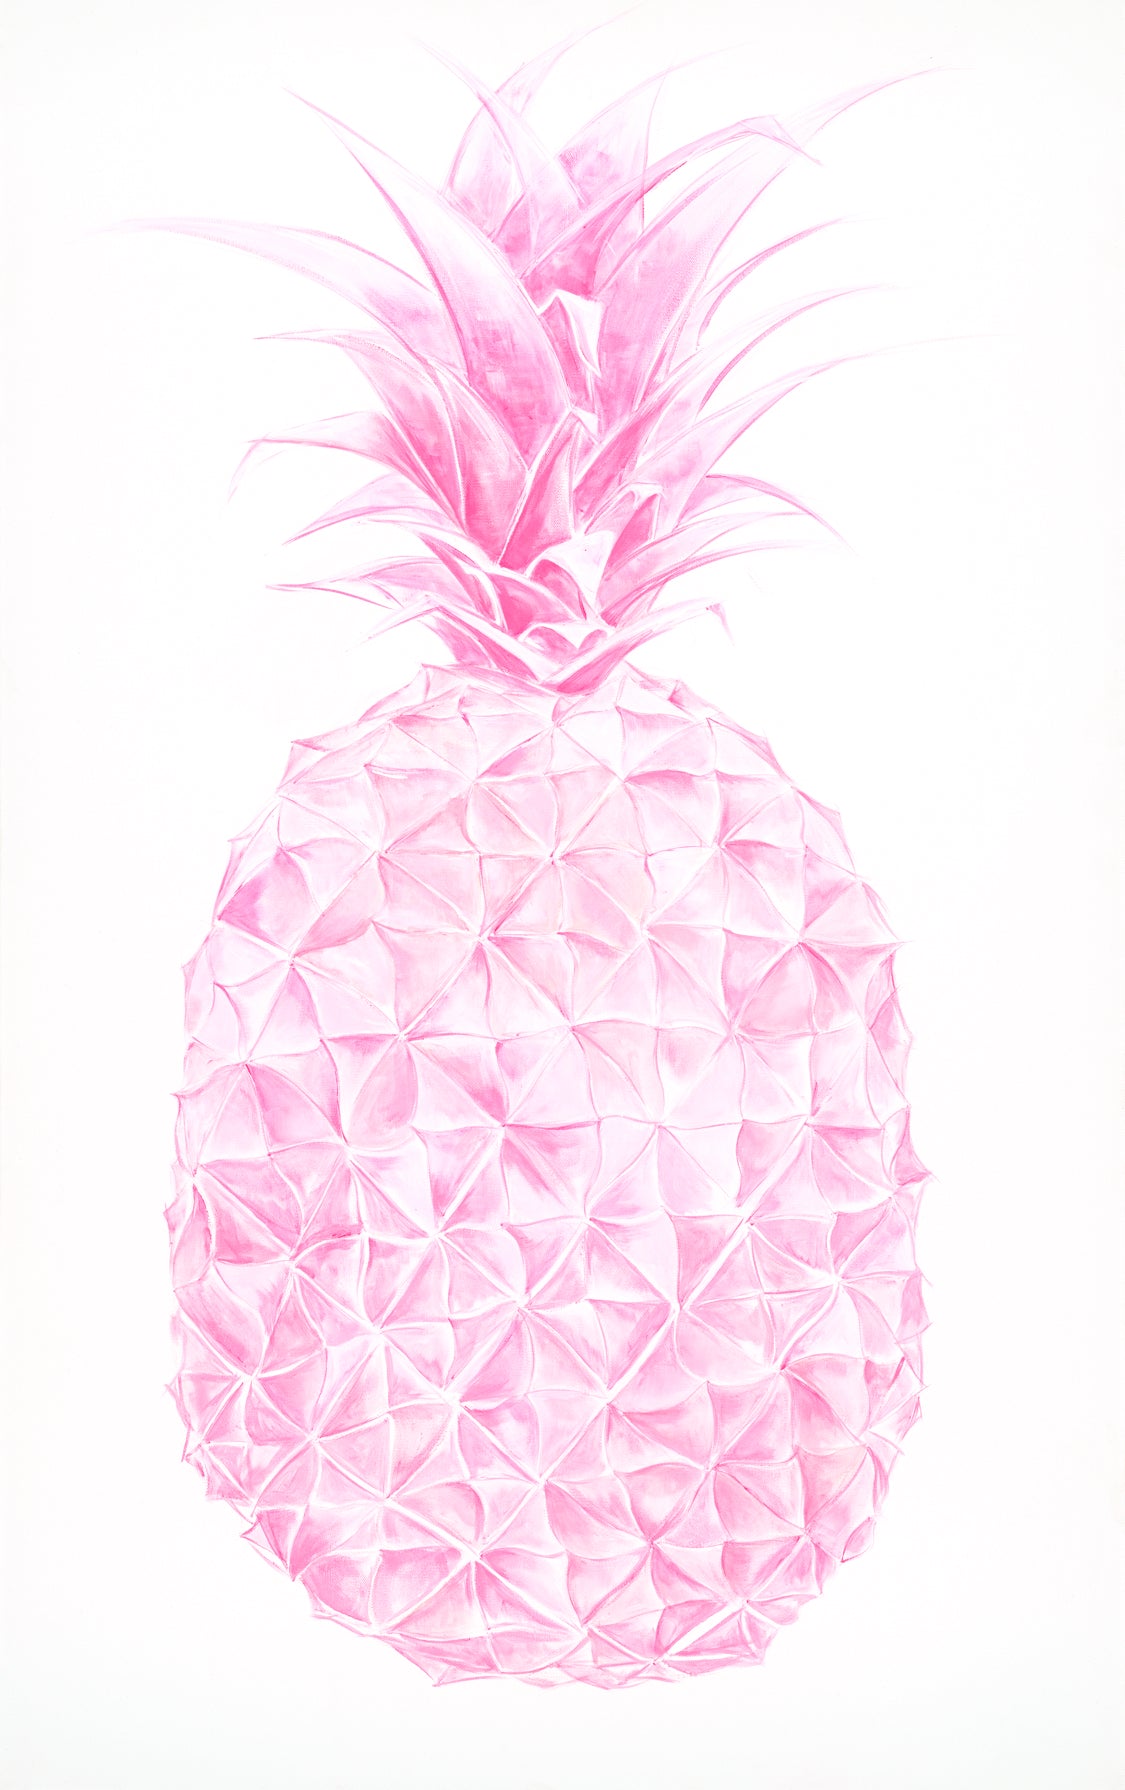 Elisabeth Hasselbeck Print of "Pink Pineapple" on UltraSmooth Fine Art Paper 11" x 14" from Chromatics, Nashville, Tn